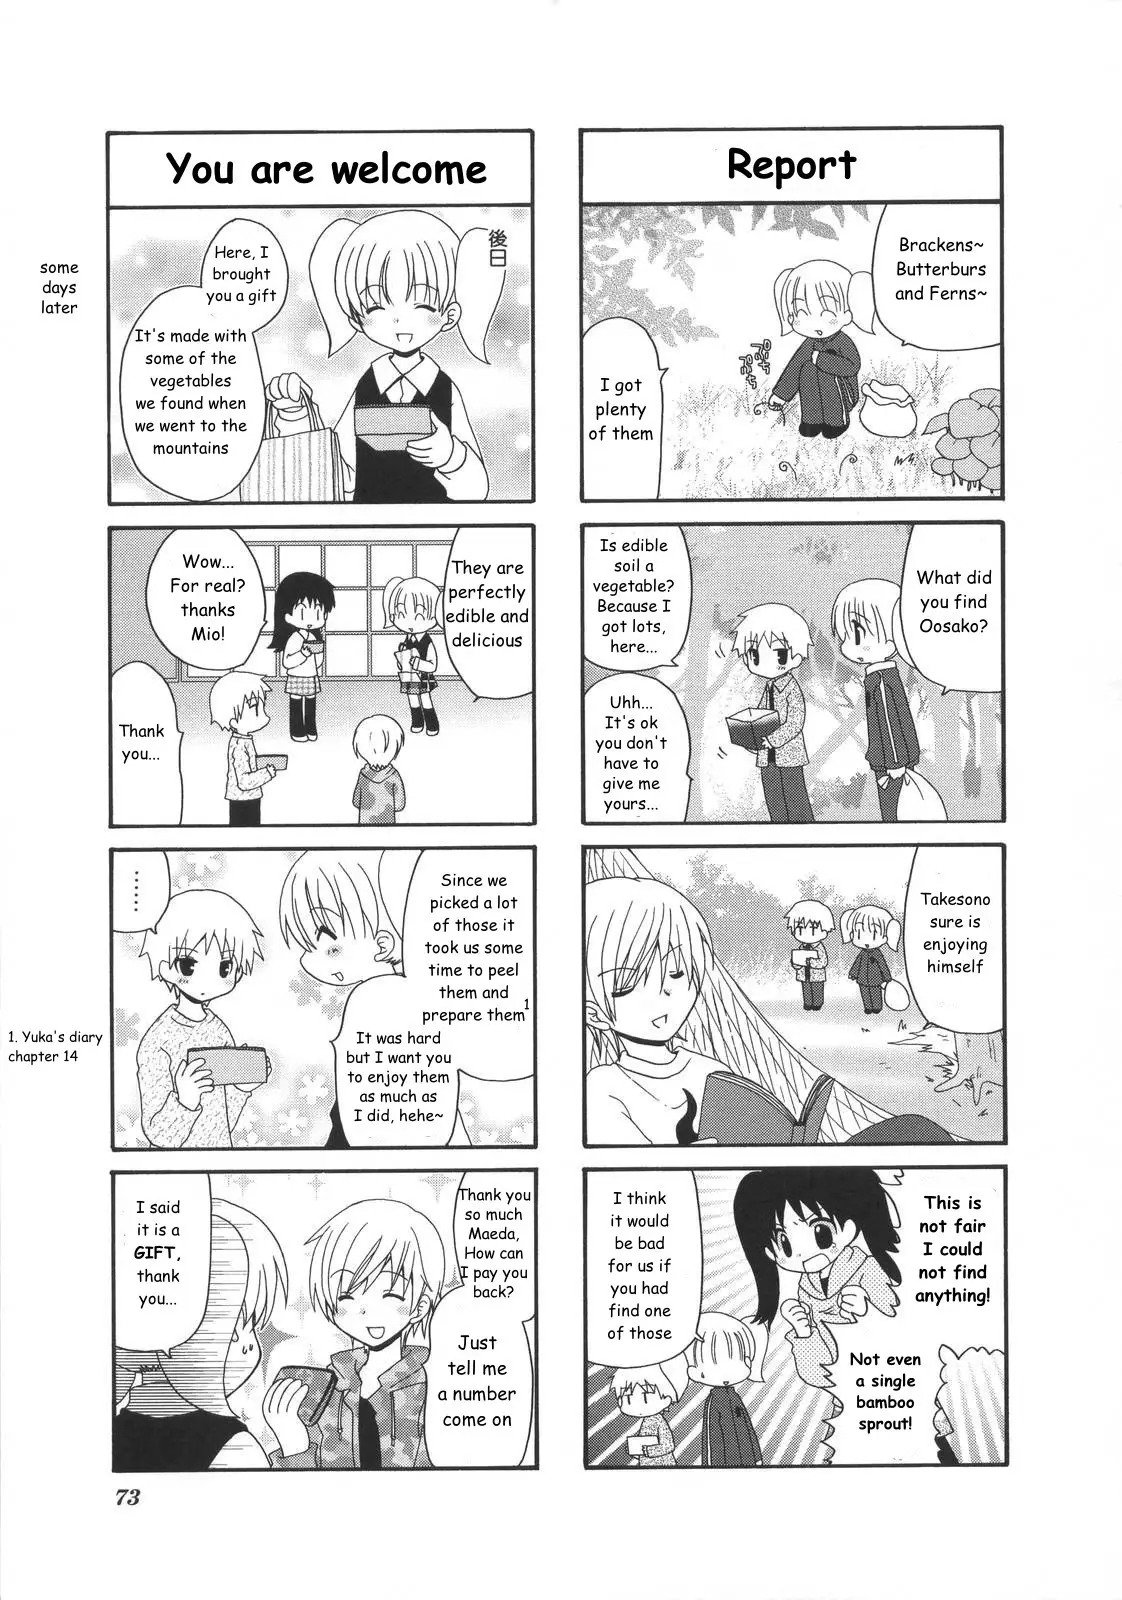 Mio's Diary - 17 page 4-74572fbc